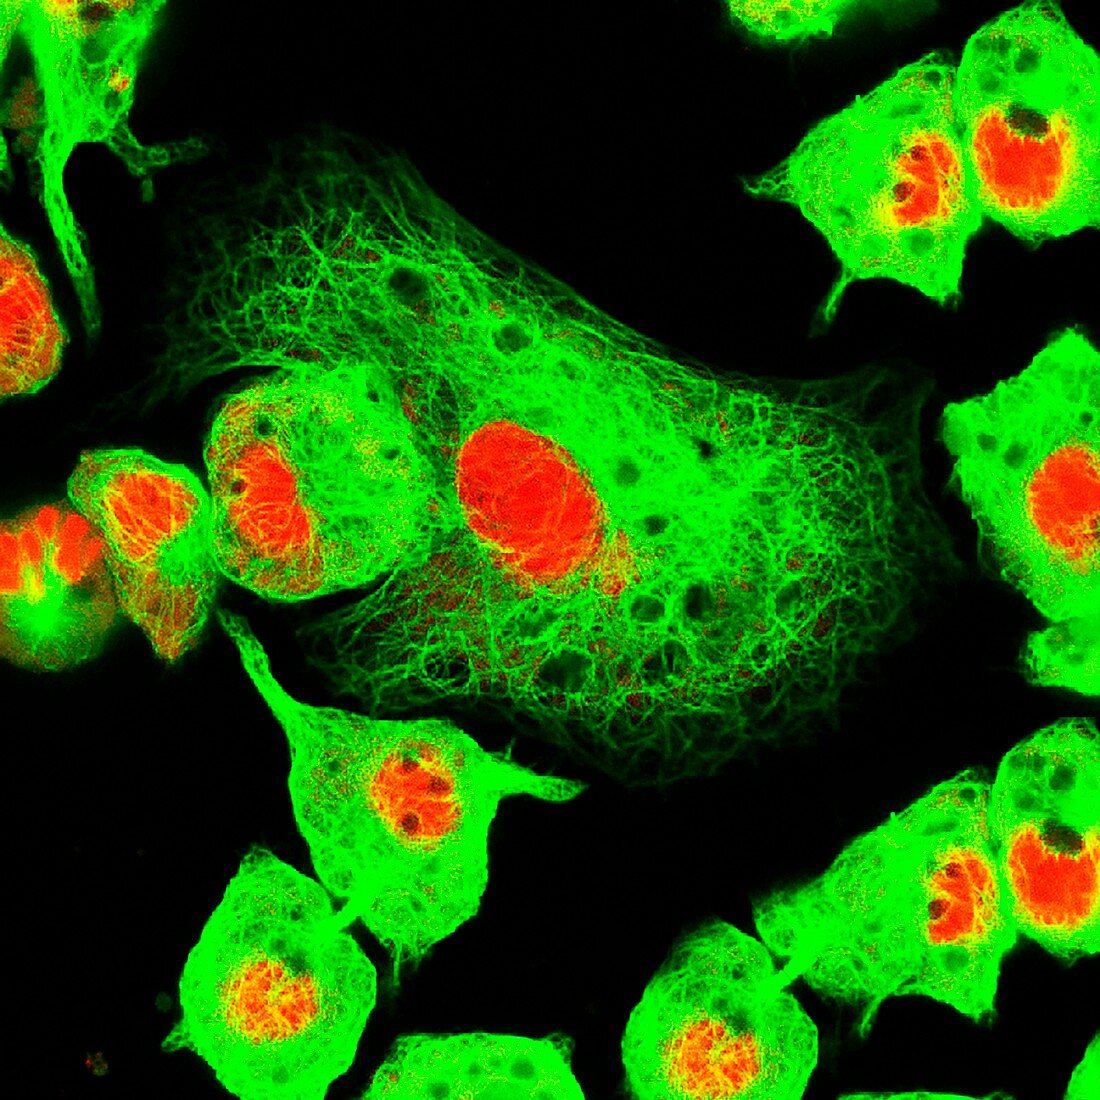 Neuroblastoma cells, fluorescence light micrograph